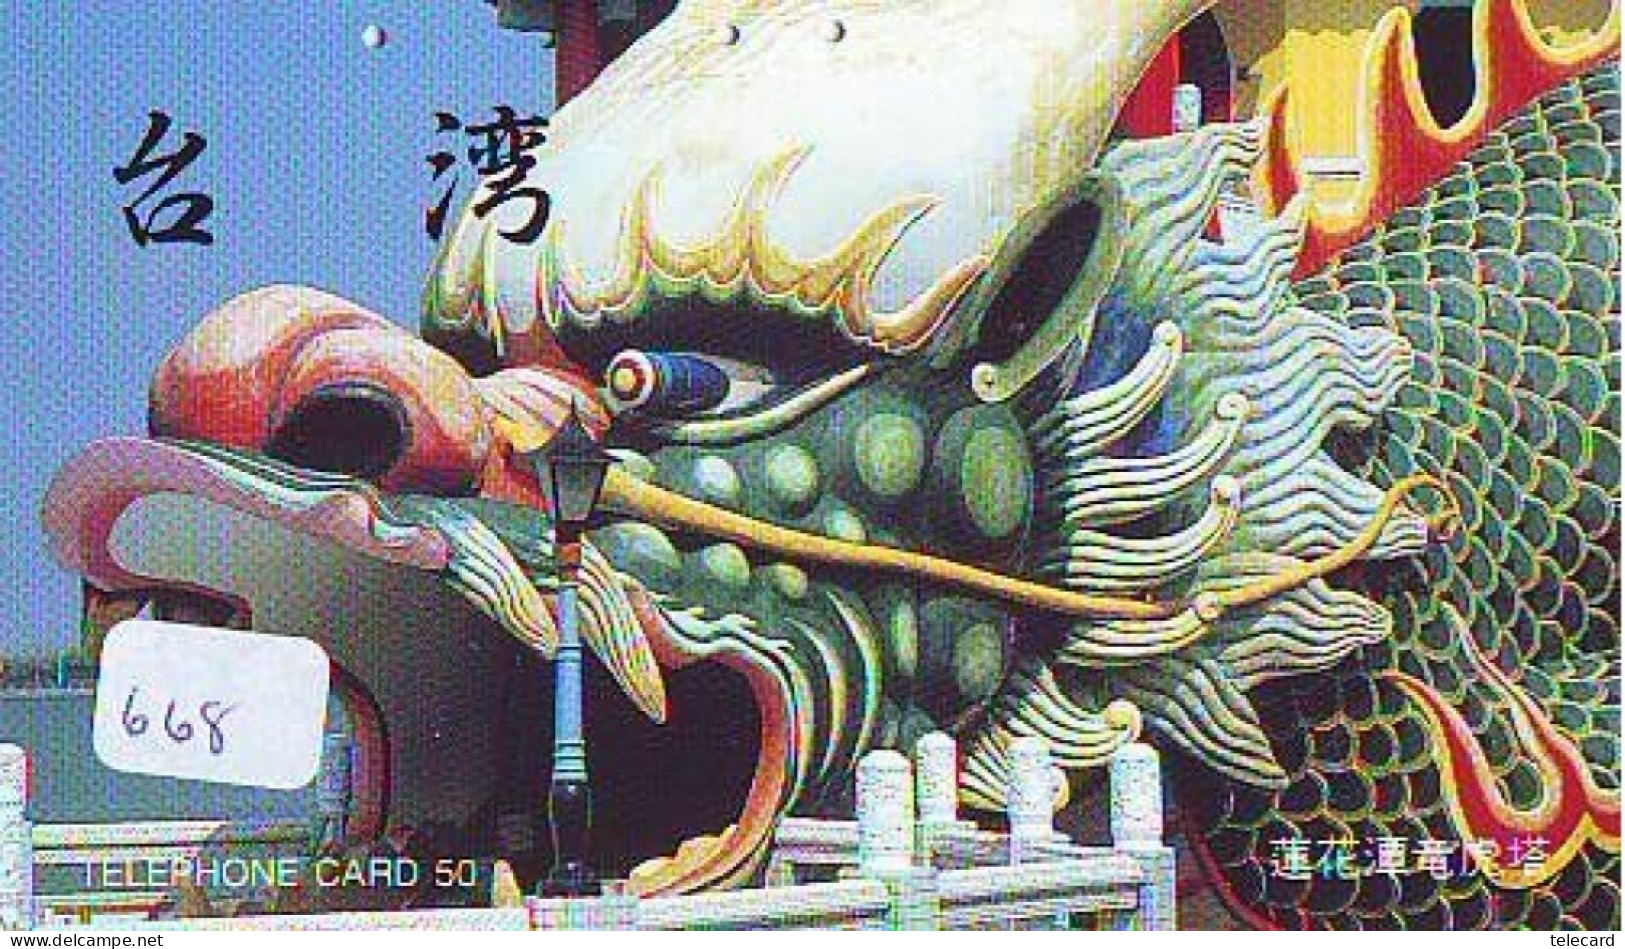 Télécarte Japon * DRAGON L'ESTRAGON DRACHE DRAGÓN DRAGO (668) Zodiaque - Zodiac Horoscope * Phonecard Japan - Zodiac